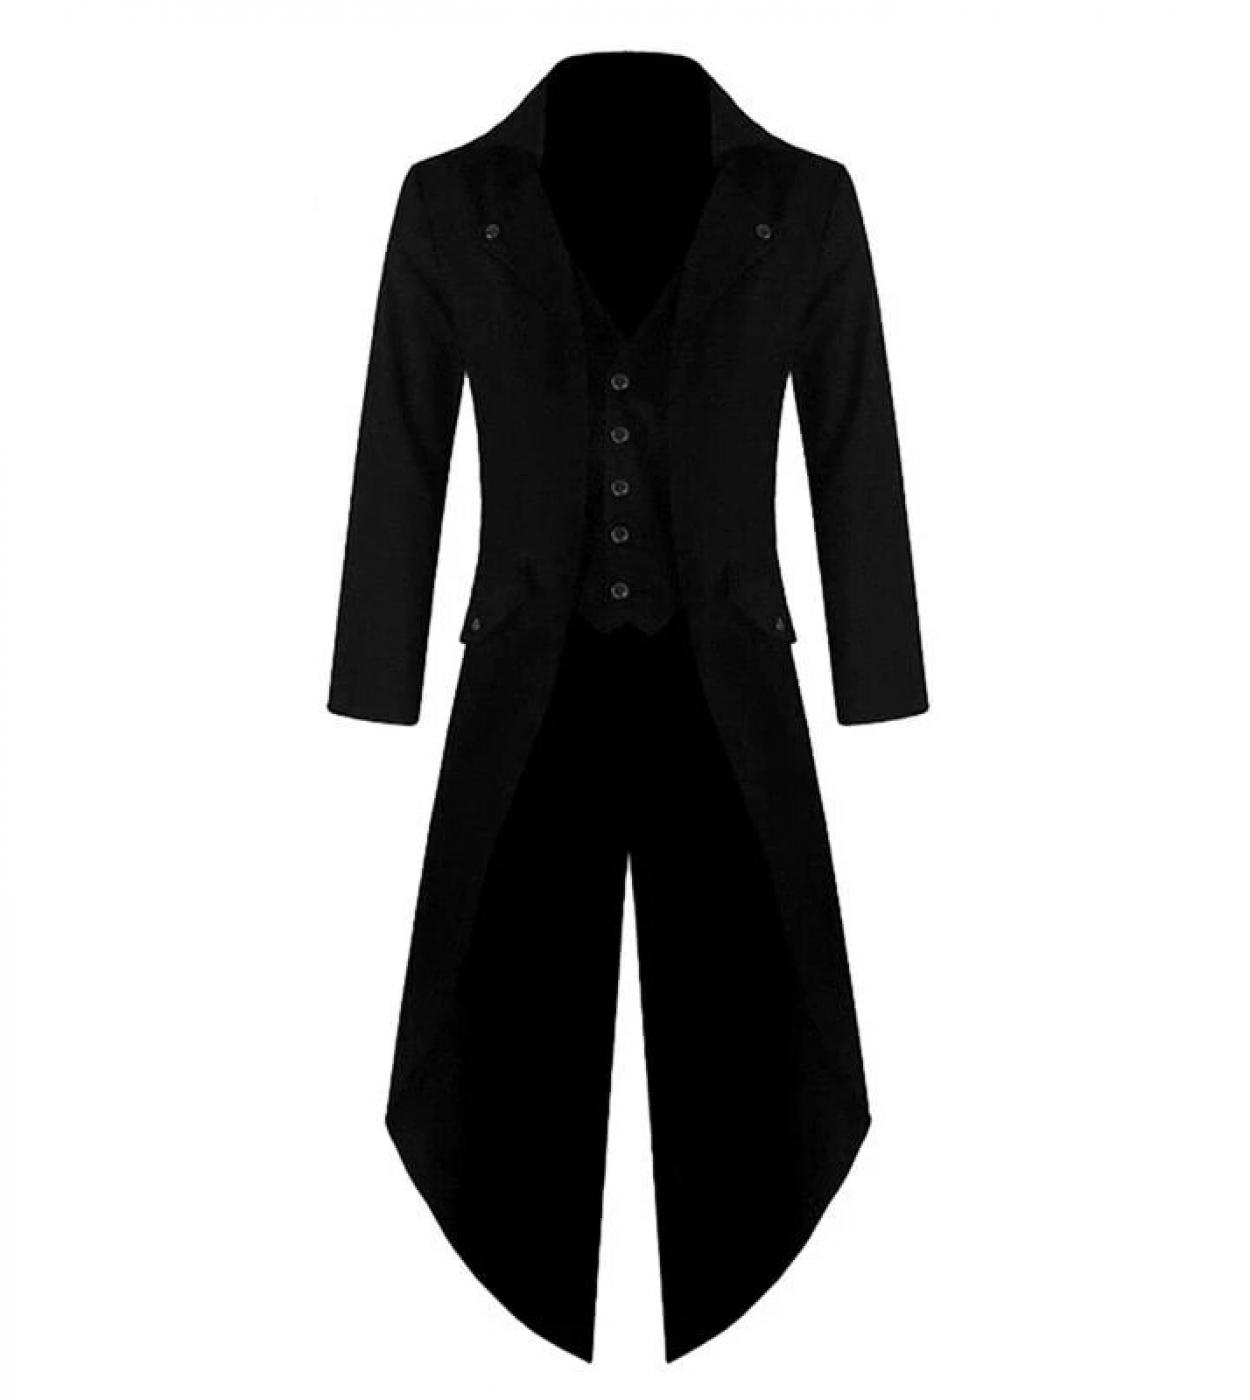  Black Steampunk Men Suits Costume Homme Slim Fit Blazer Tuxedos Groom Wedding Terno Masculino 3 Pcs long Jacketpantv